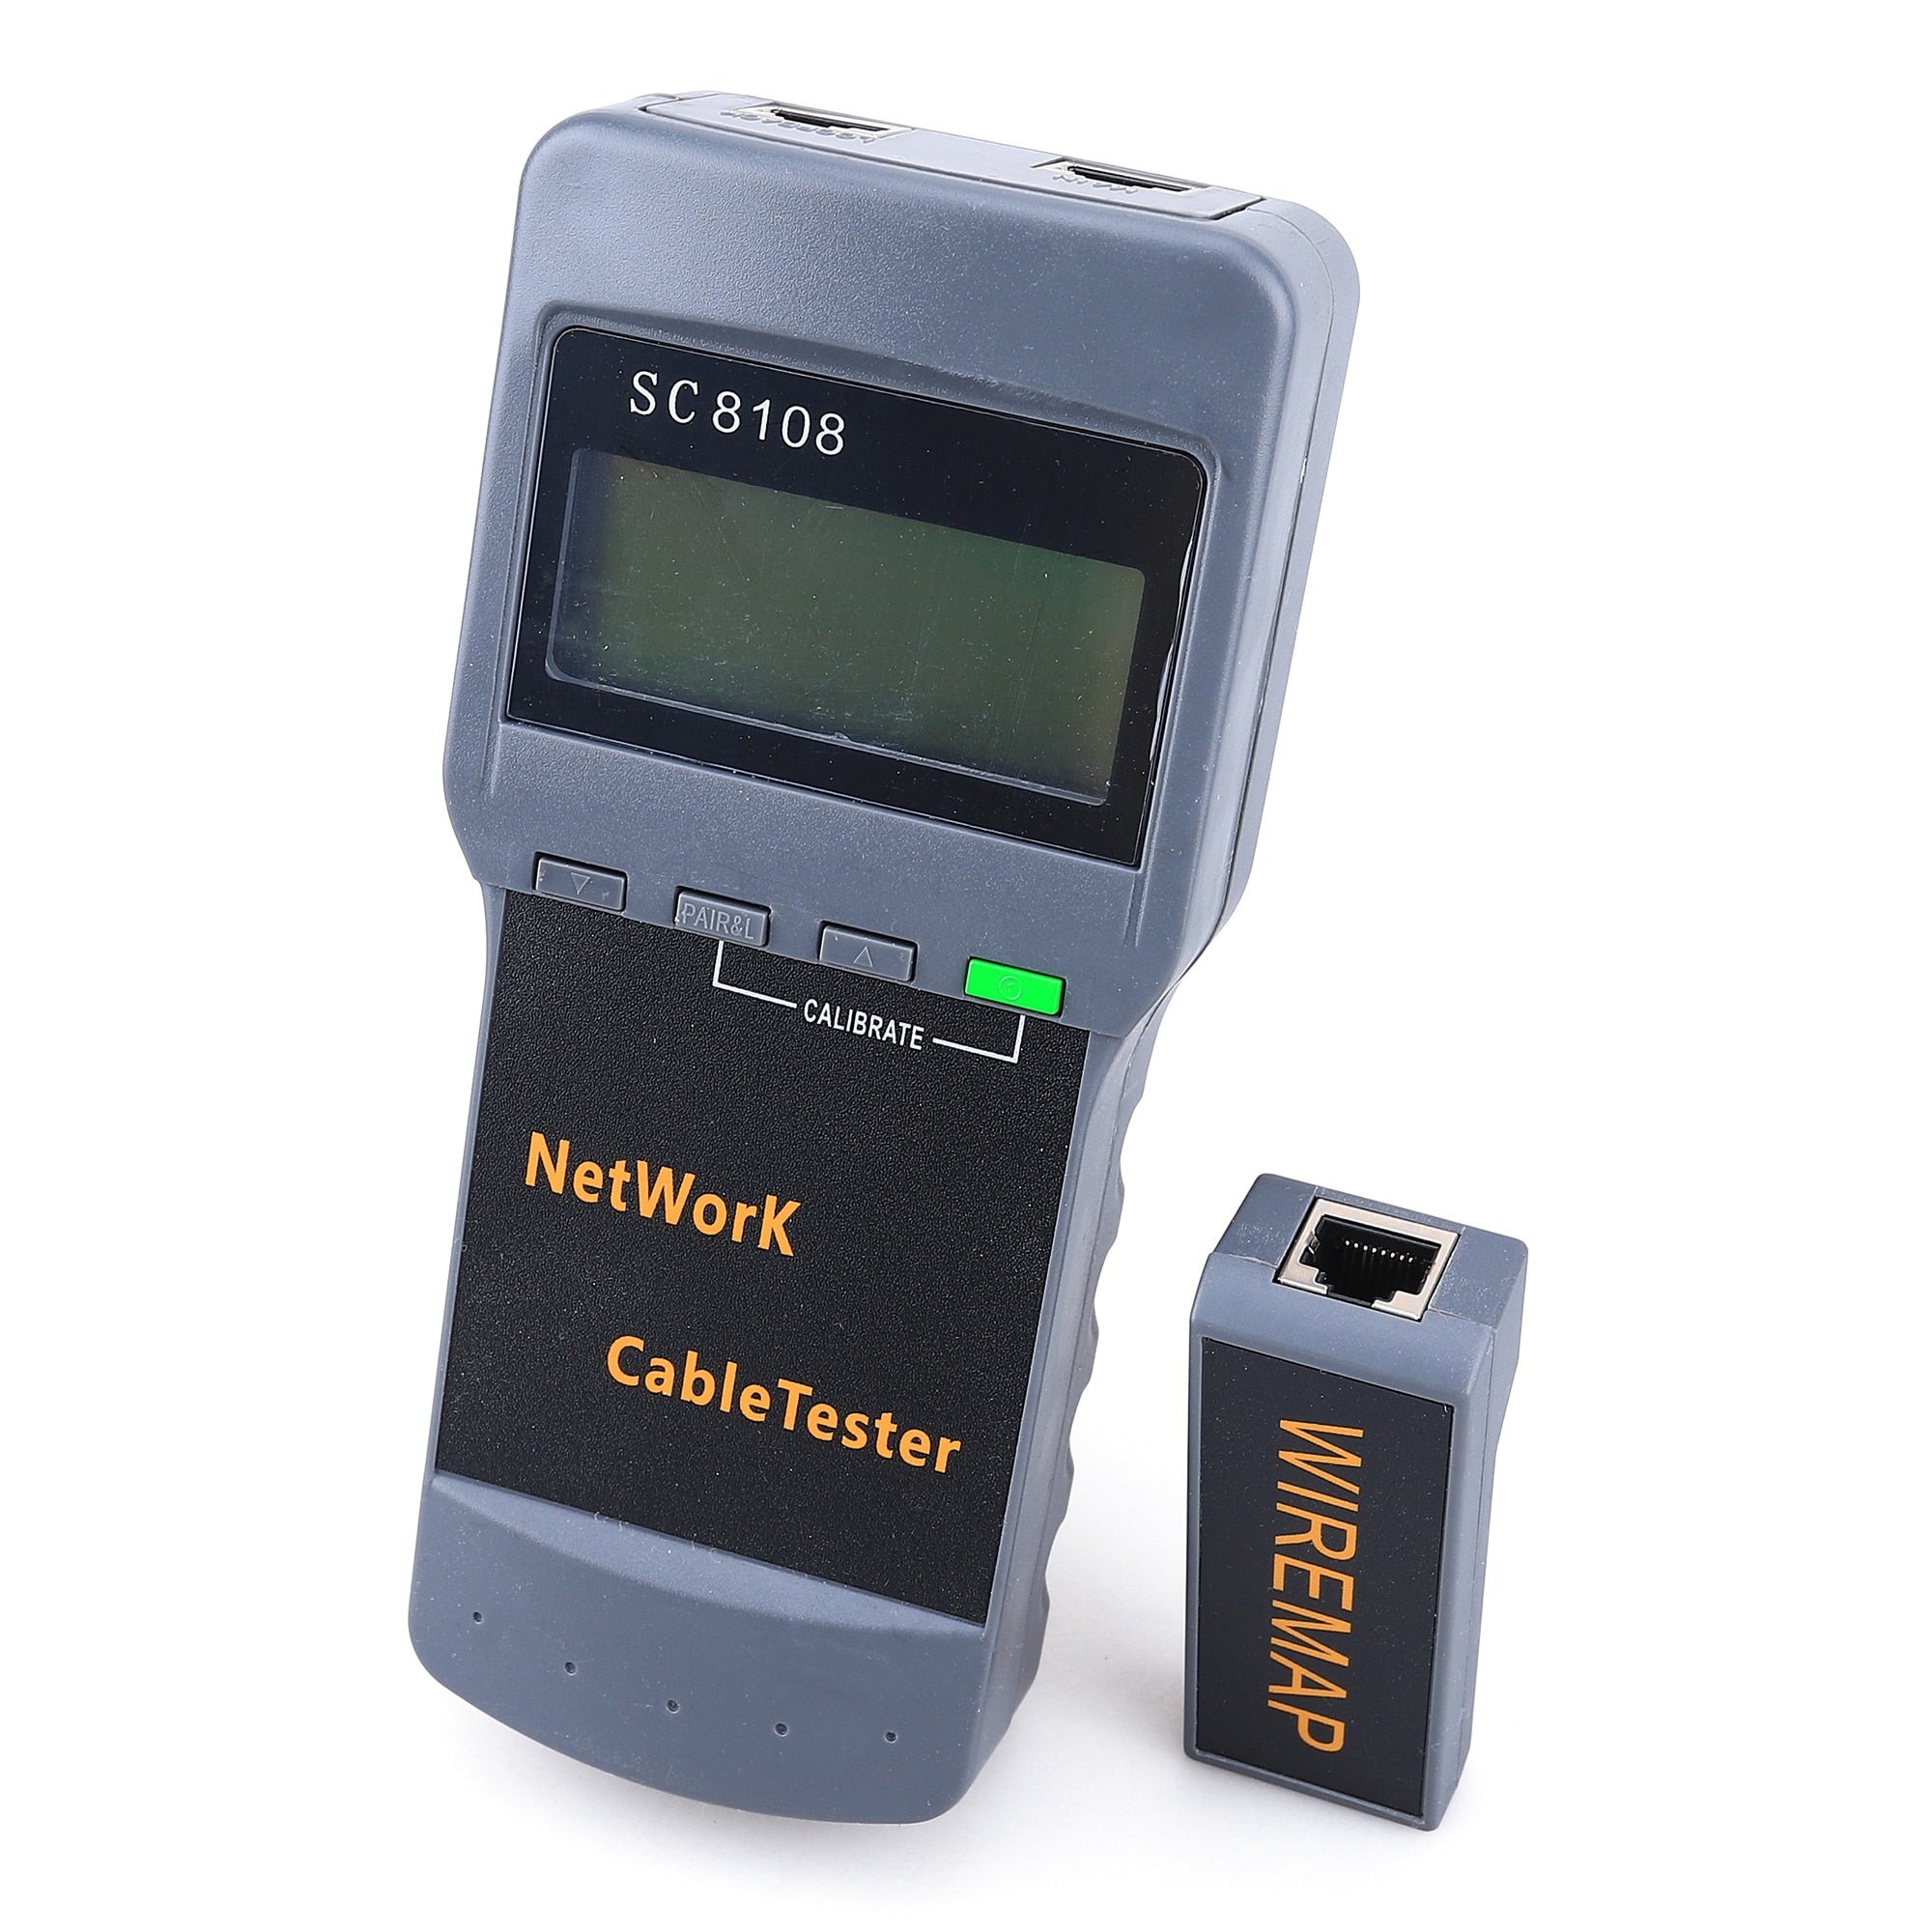 KELUSHI Portable Multifunction Wireless Network Tester SC8108 LCD Digital PC Data Network CAT5 RJ45 LAN Phone Cable Tester Meter